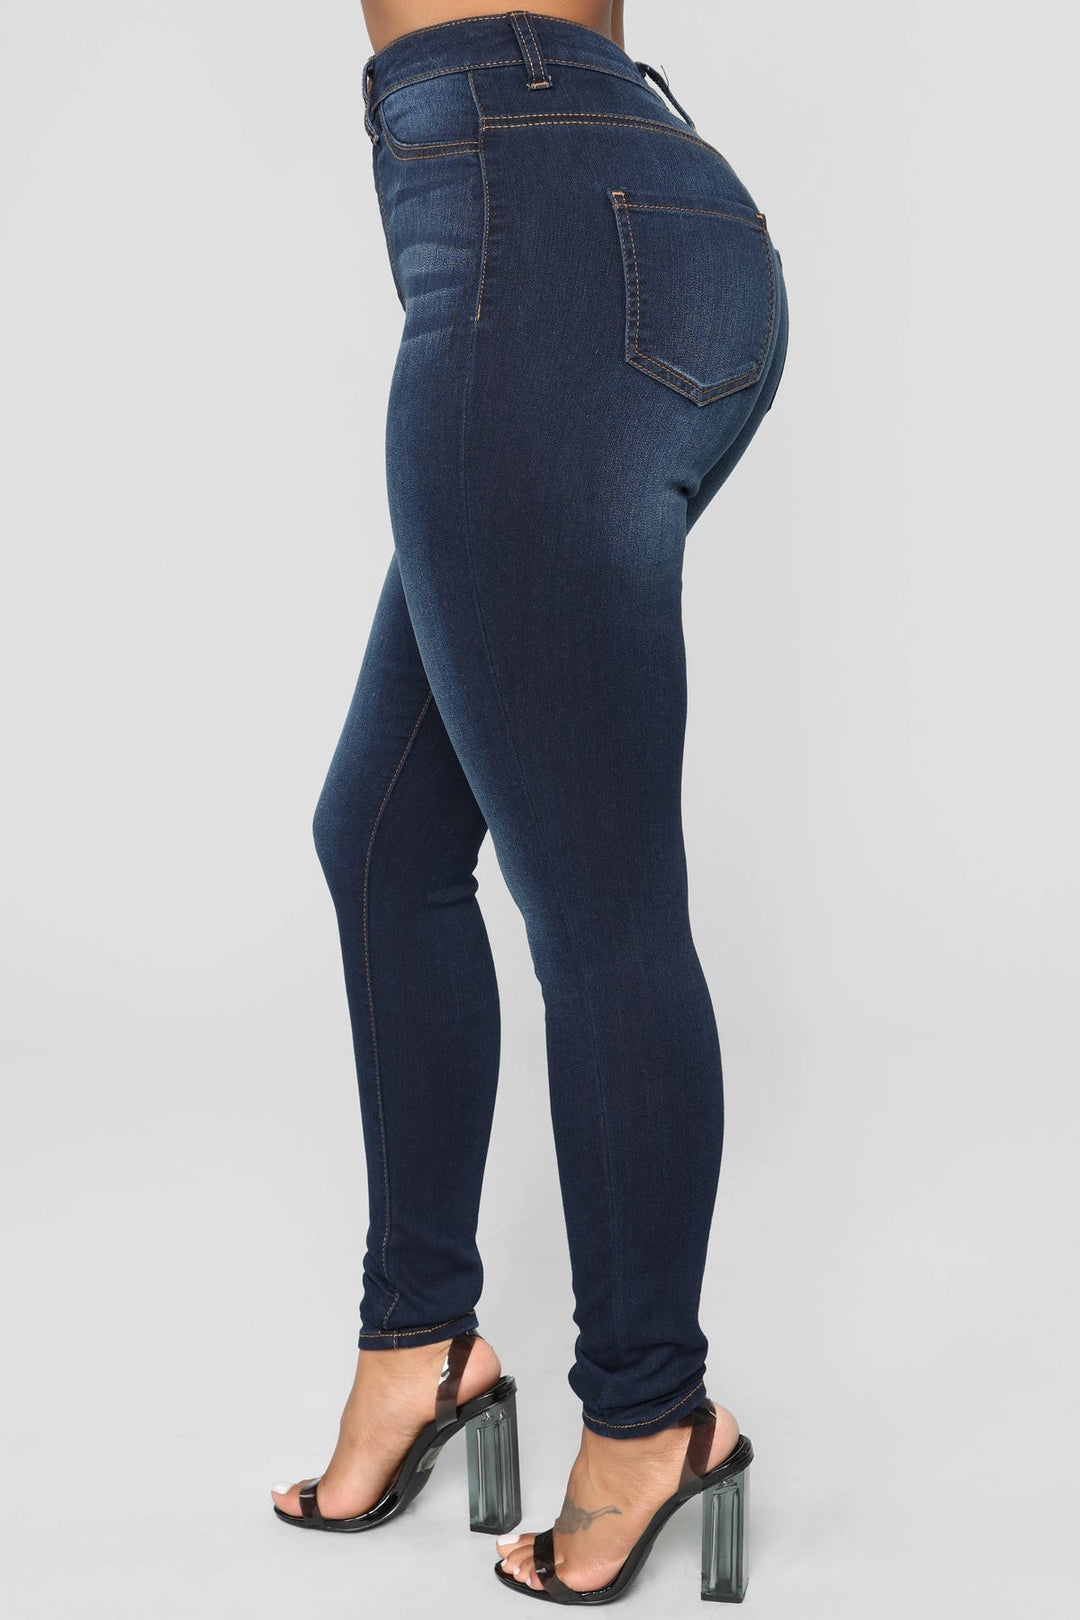 Stretchy Ultra High Waist Hip Lift Skinny Denim Jeans in Plus Sizes 